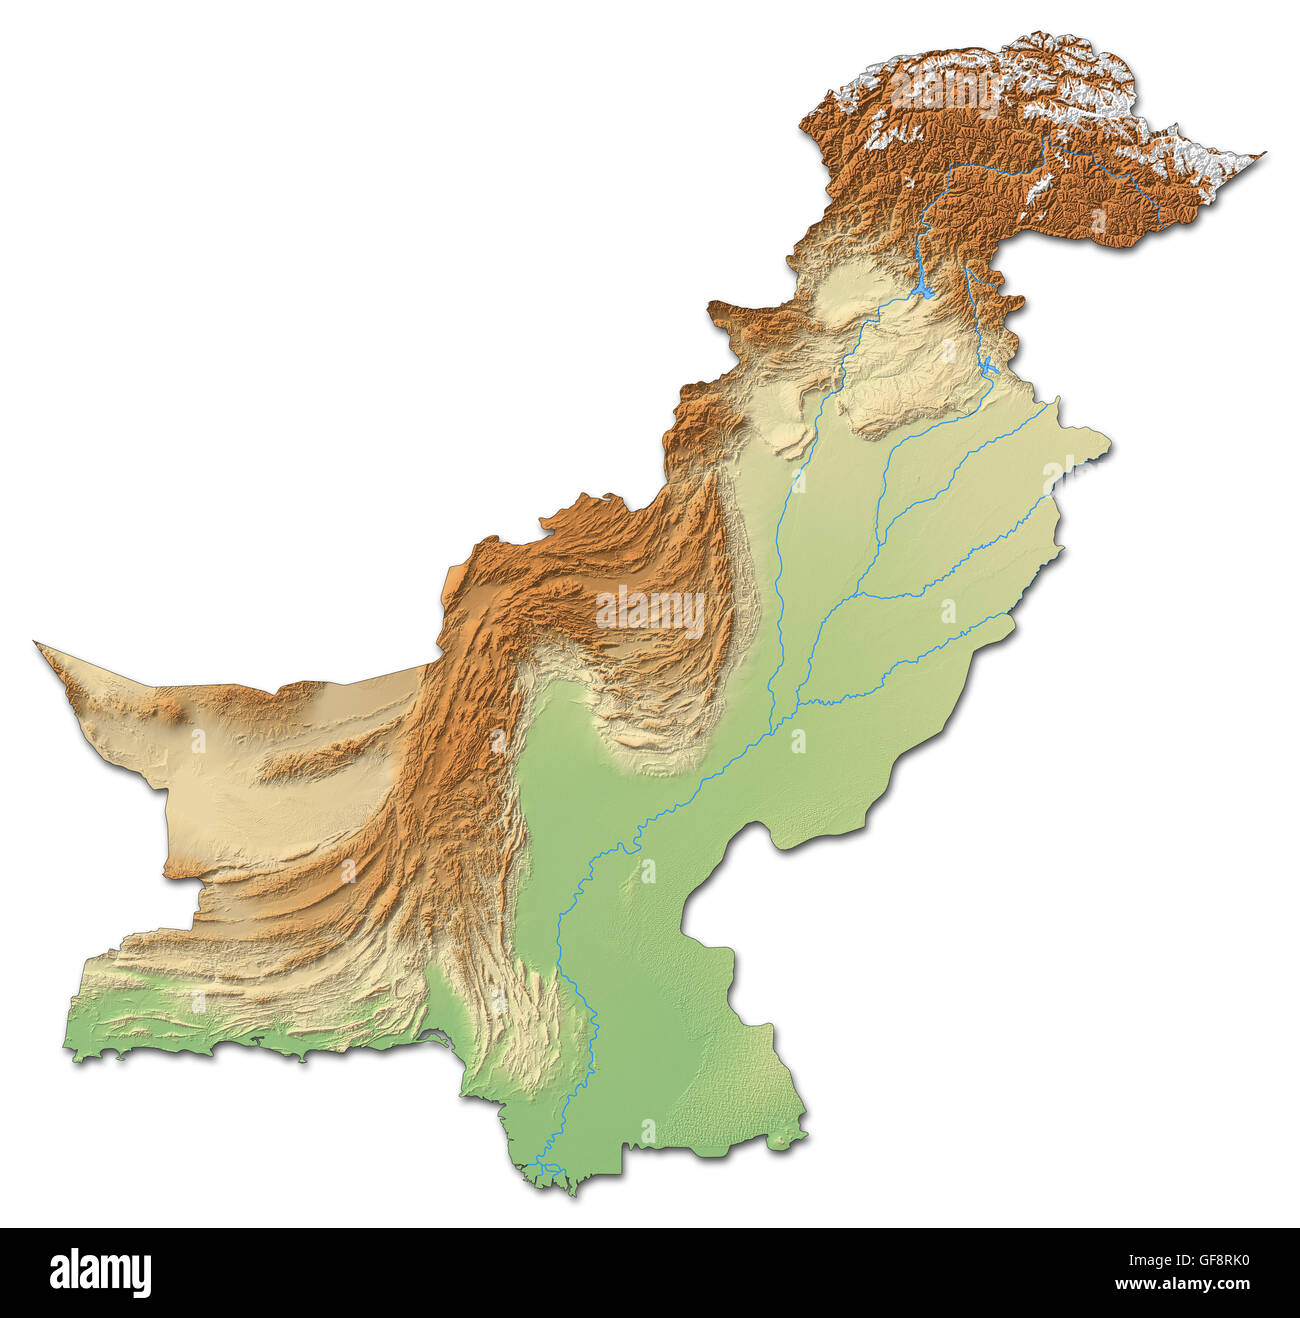 pakistan-relief-map-populationdata